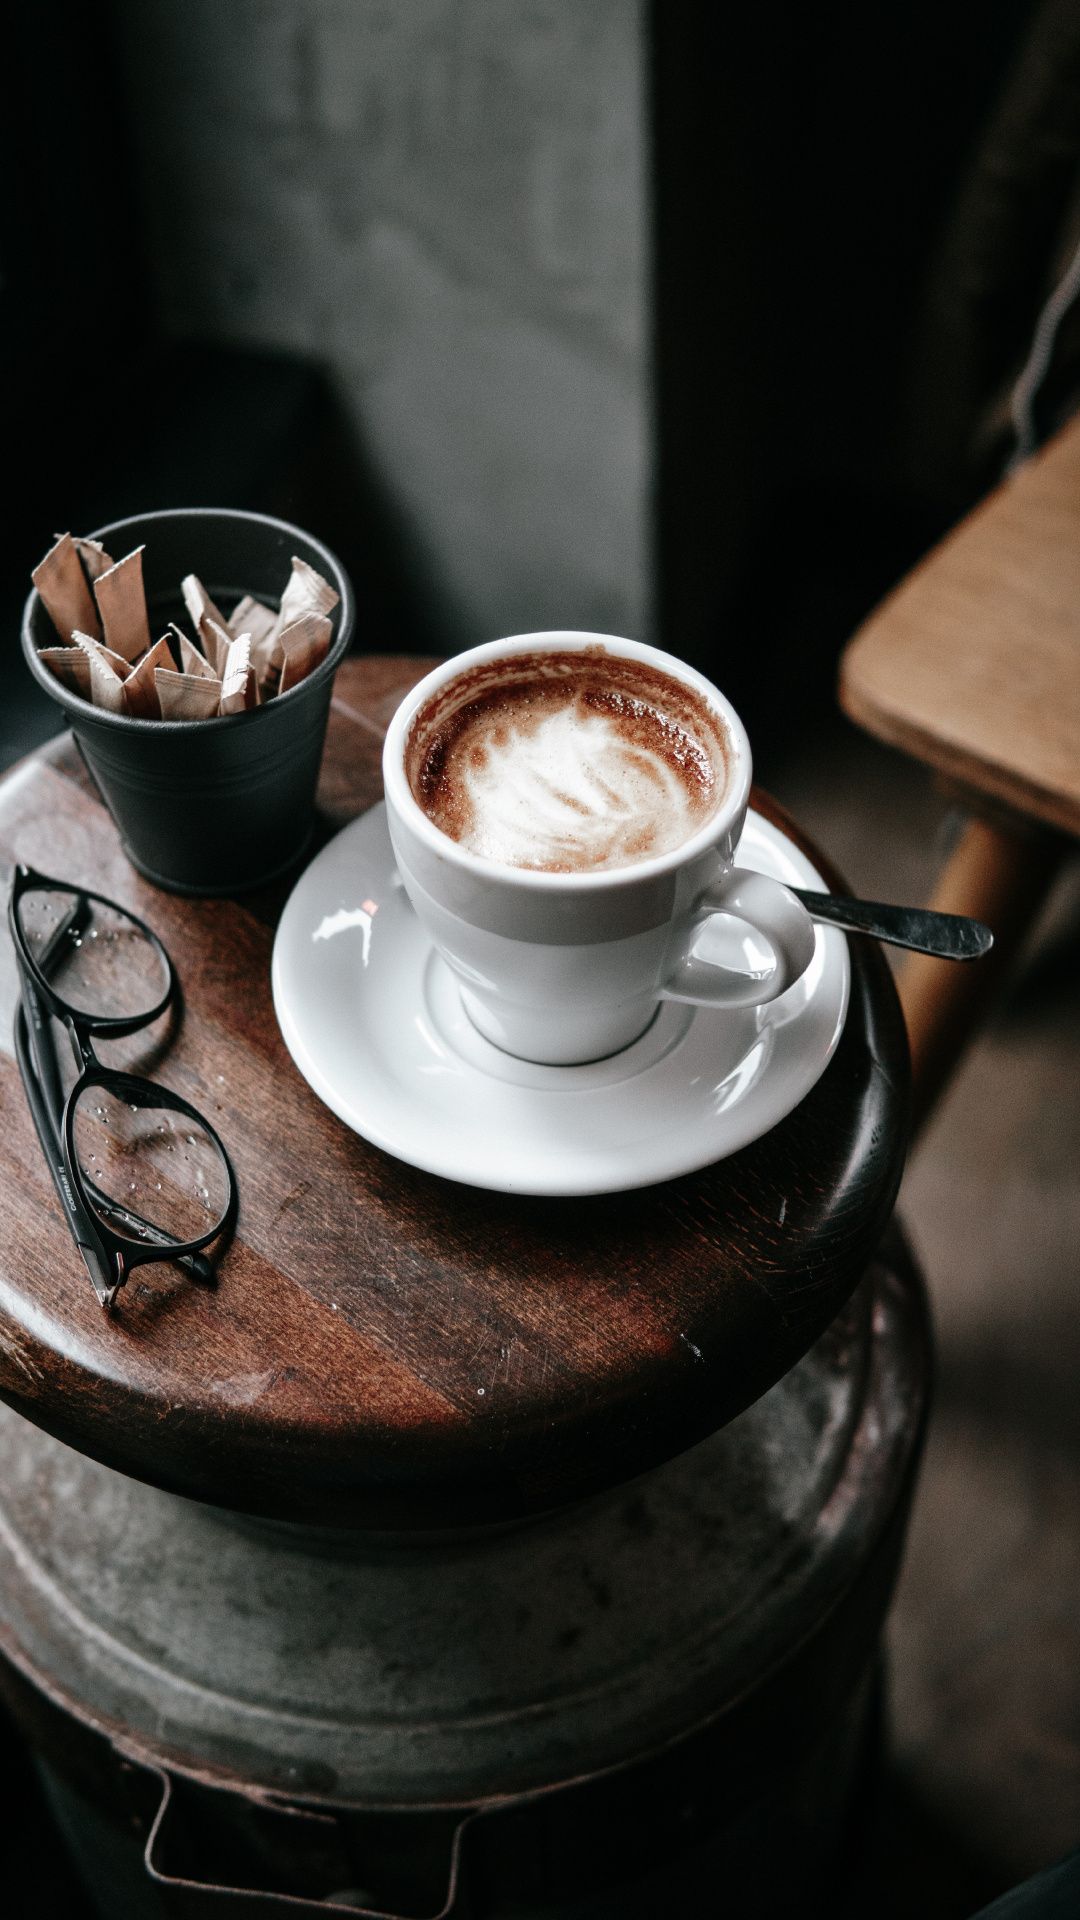 Wallpaper teacup, espresso, table, cortado, Coffee. Coffee picture, Coffee lover, Coffee addict